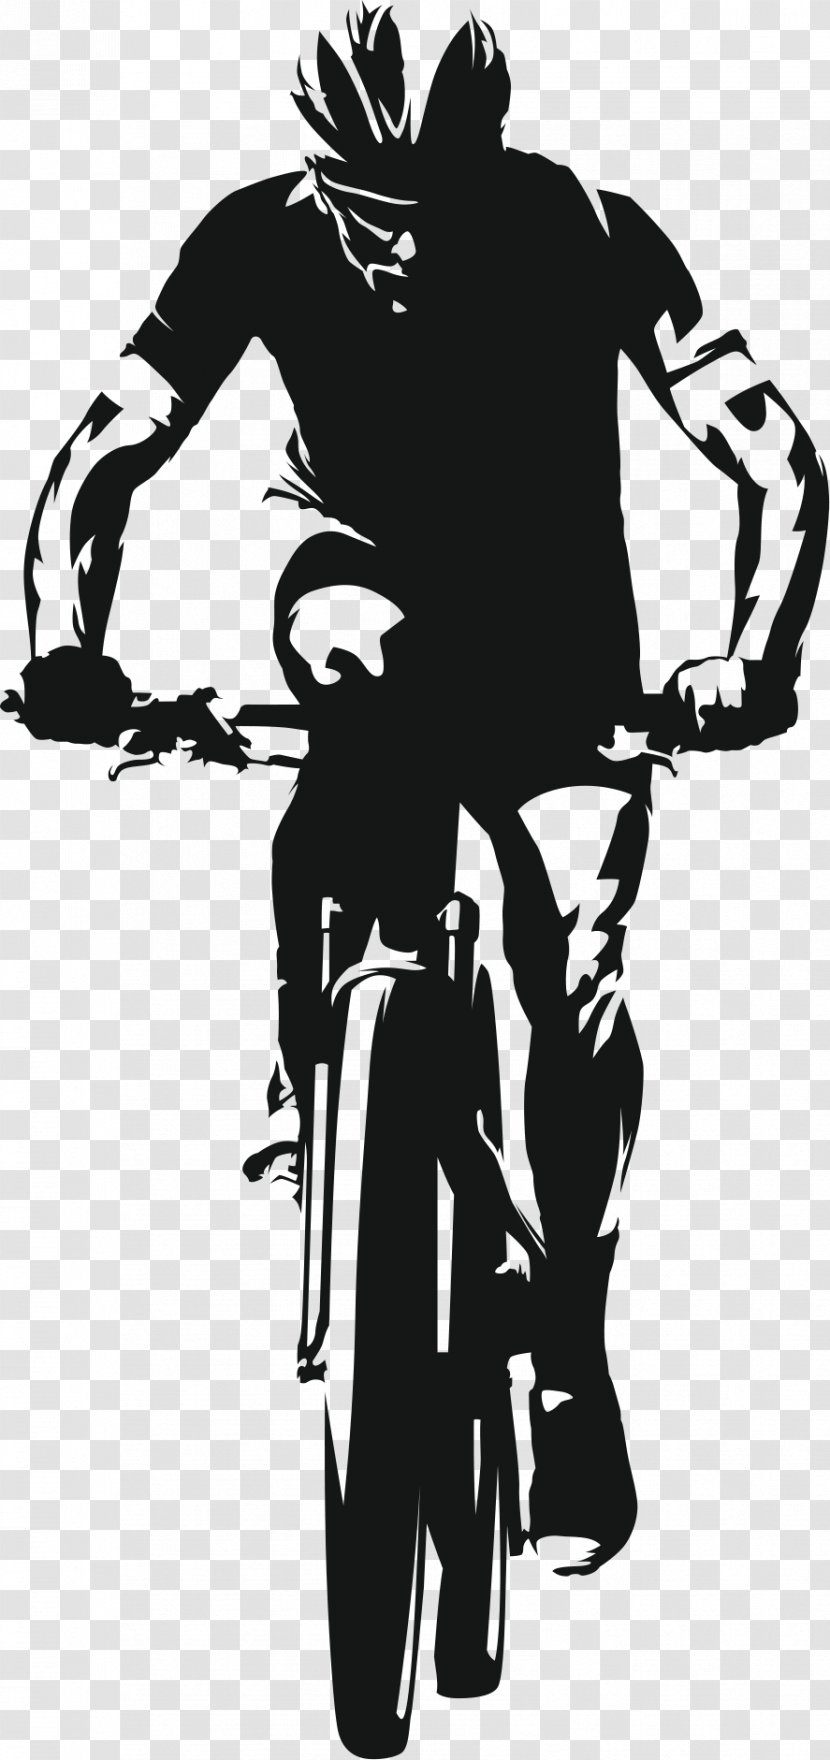 Vector Graphics Mountain Bike Bicycle Biking Illustration - Sports Equipment Transparent PNG